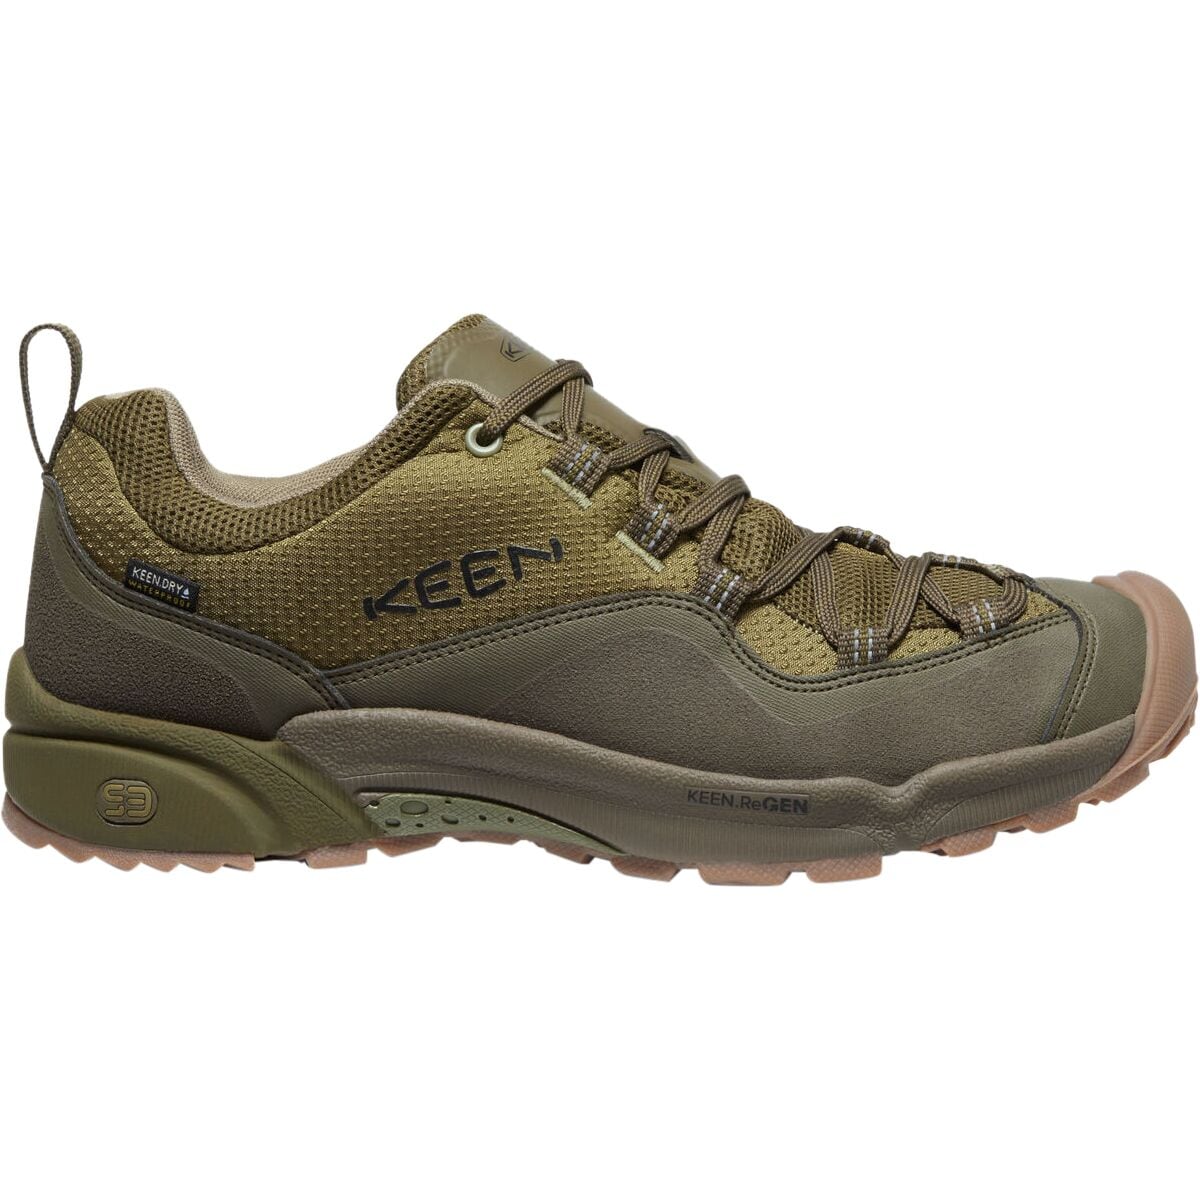 KEEN Wasatch Crest Waterproof Hiking Shoe - Men's